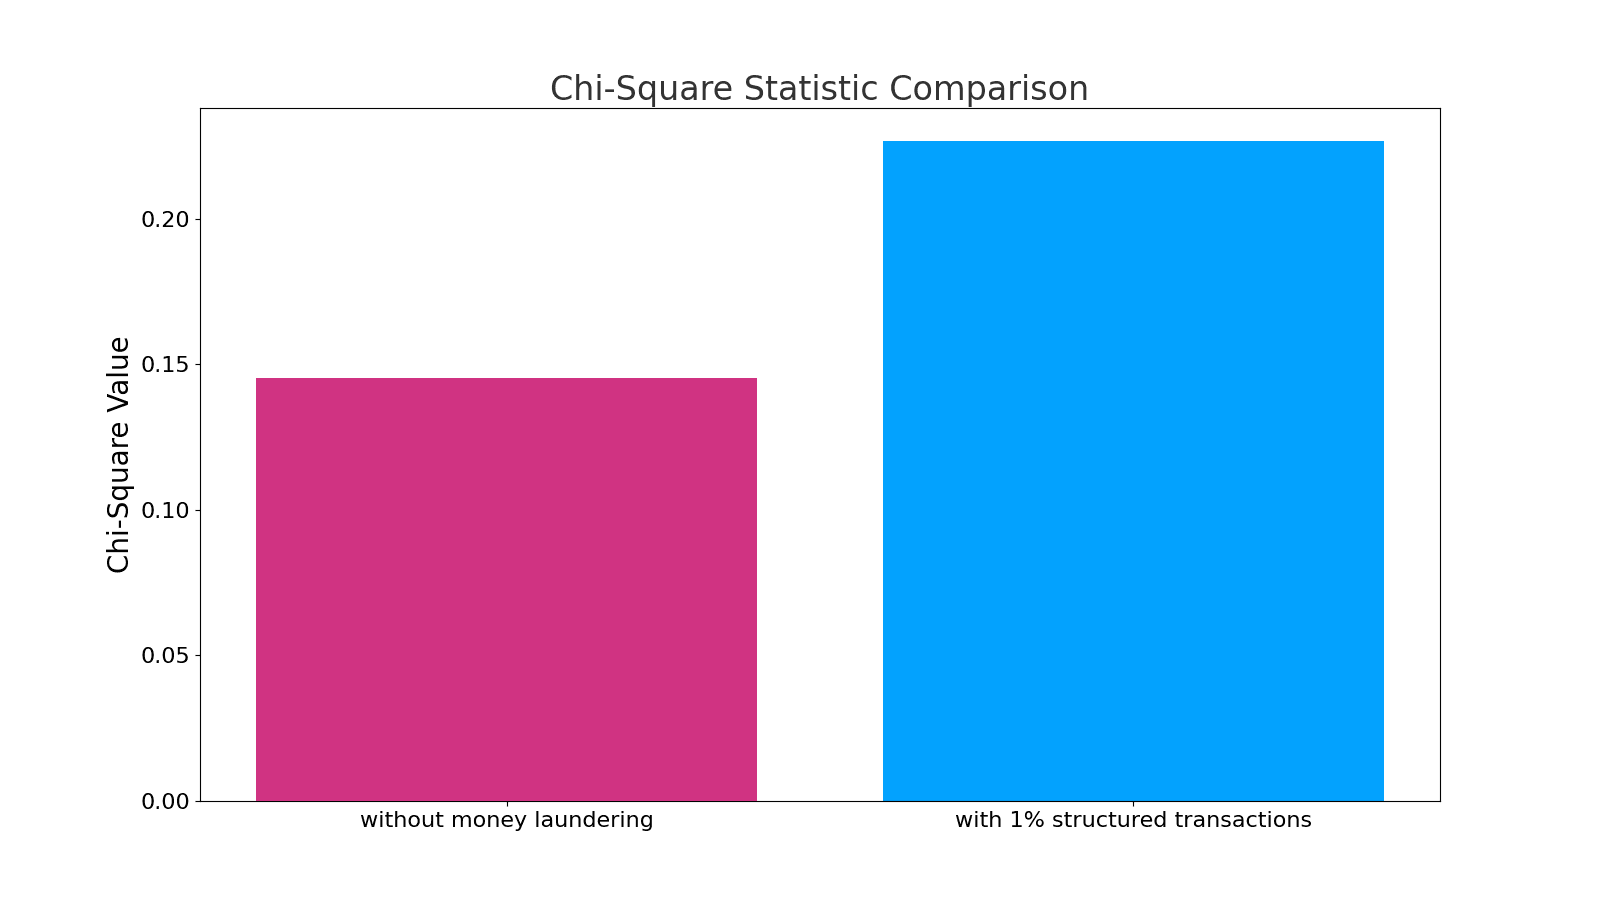 The Chi-Square Statistic for both scenarios.